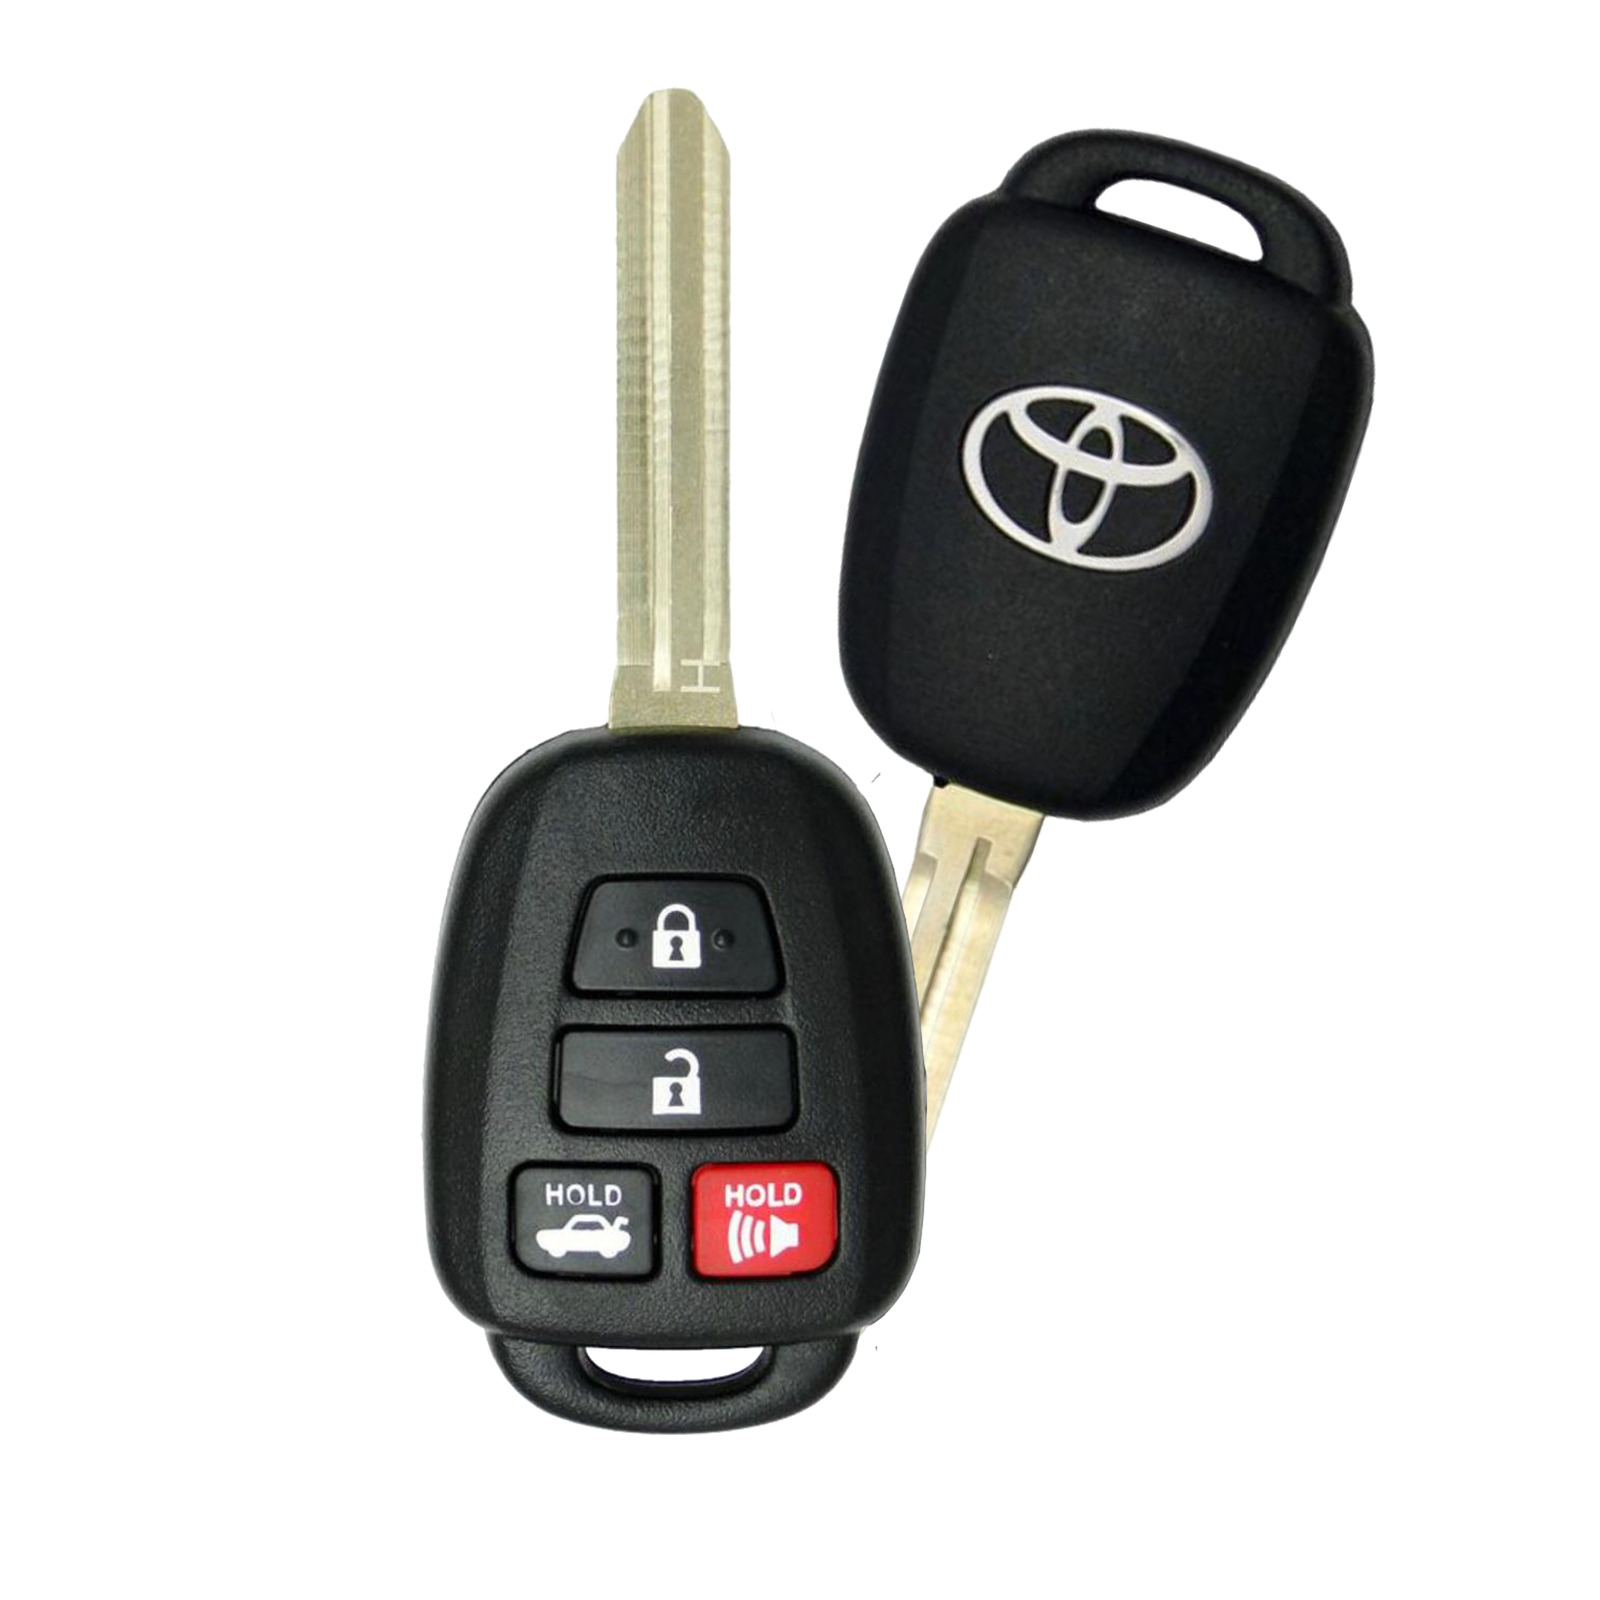 2014 - 2019 OEM Original Toyota Corolla Remote Head Key HYQ12BEL / Chip Letter H